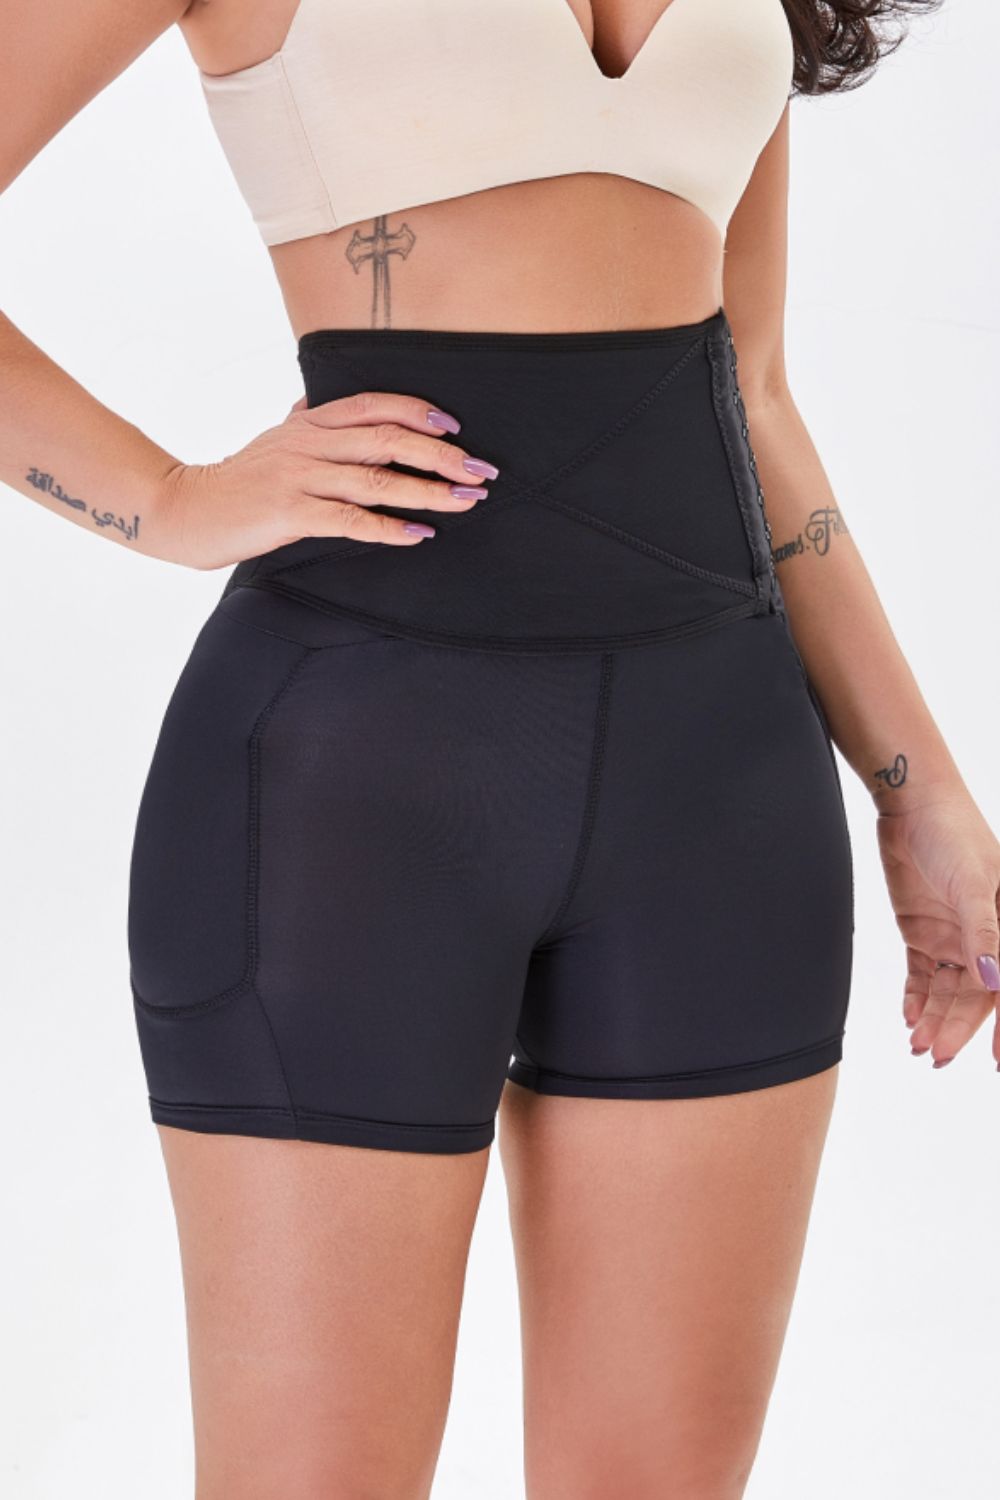 Full Size Hip Lifting Shaping Shorts Print on any thing USA/STOD clothes